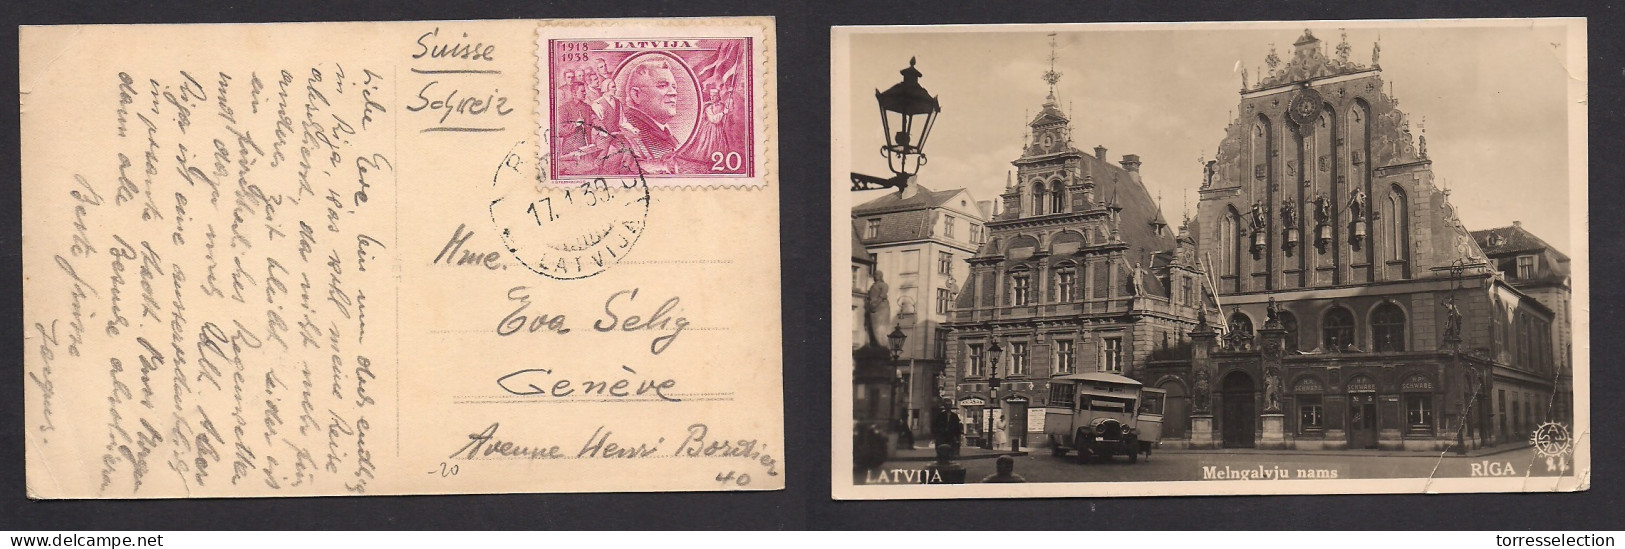 LATVIA. 1939 (17 Jan) Riga - Geneve, Switzerland. Single 20c Violet Fkd Ppc. Fine Used. - Letonia